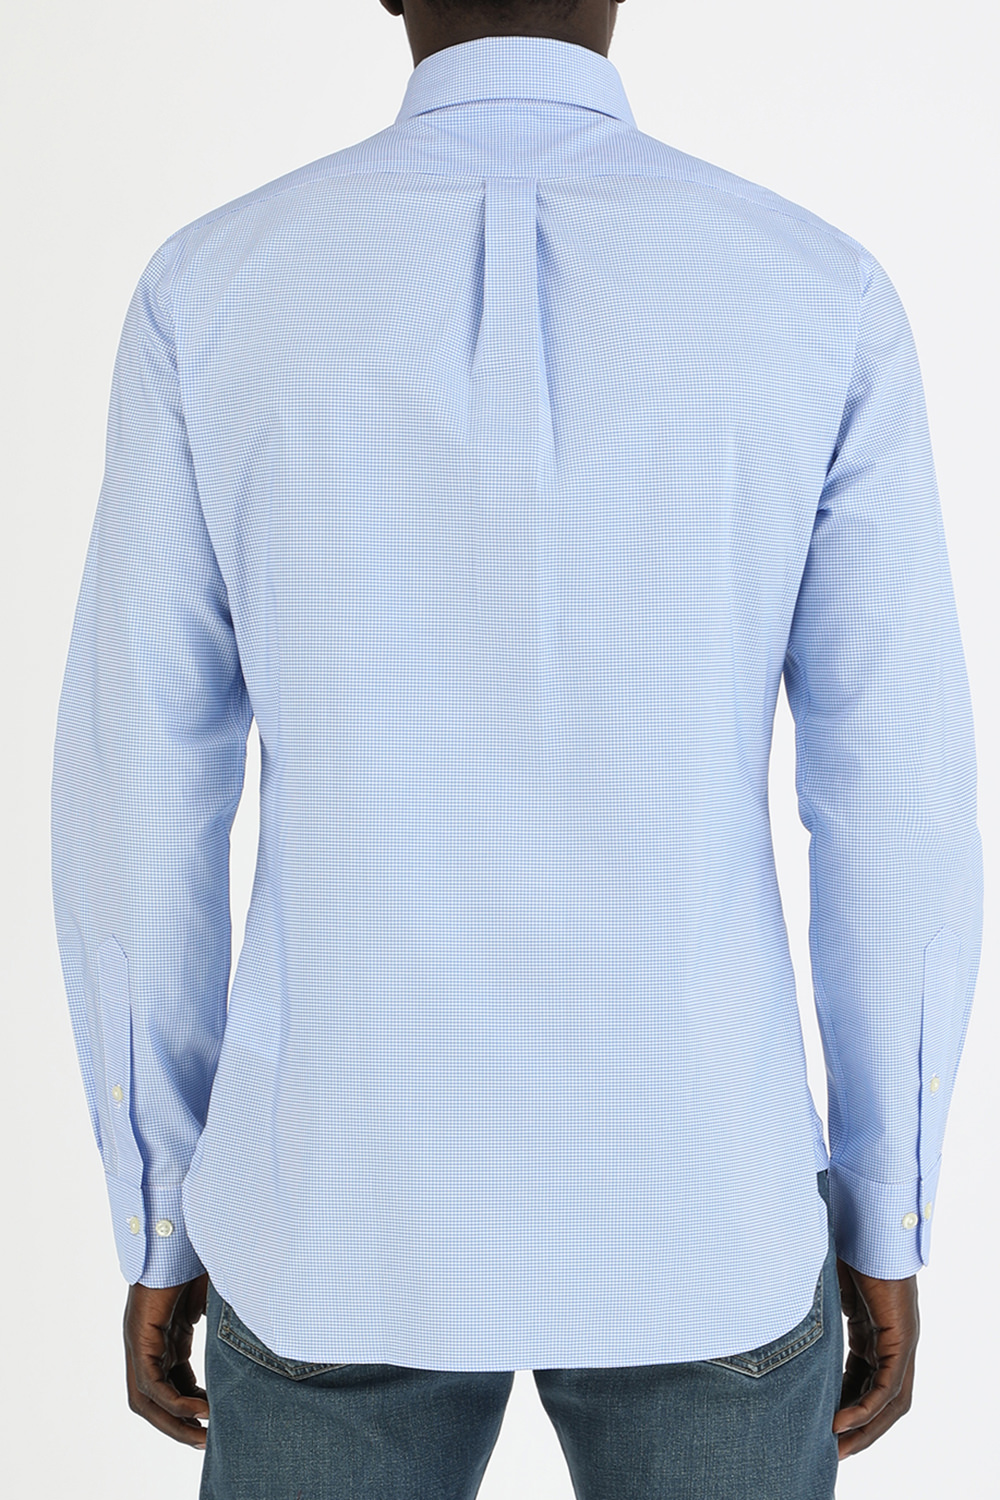 Classic Fit Plaid Oxford Shirt in Pale Blue POLO RALPH LAUREN